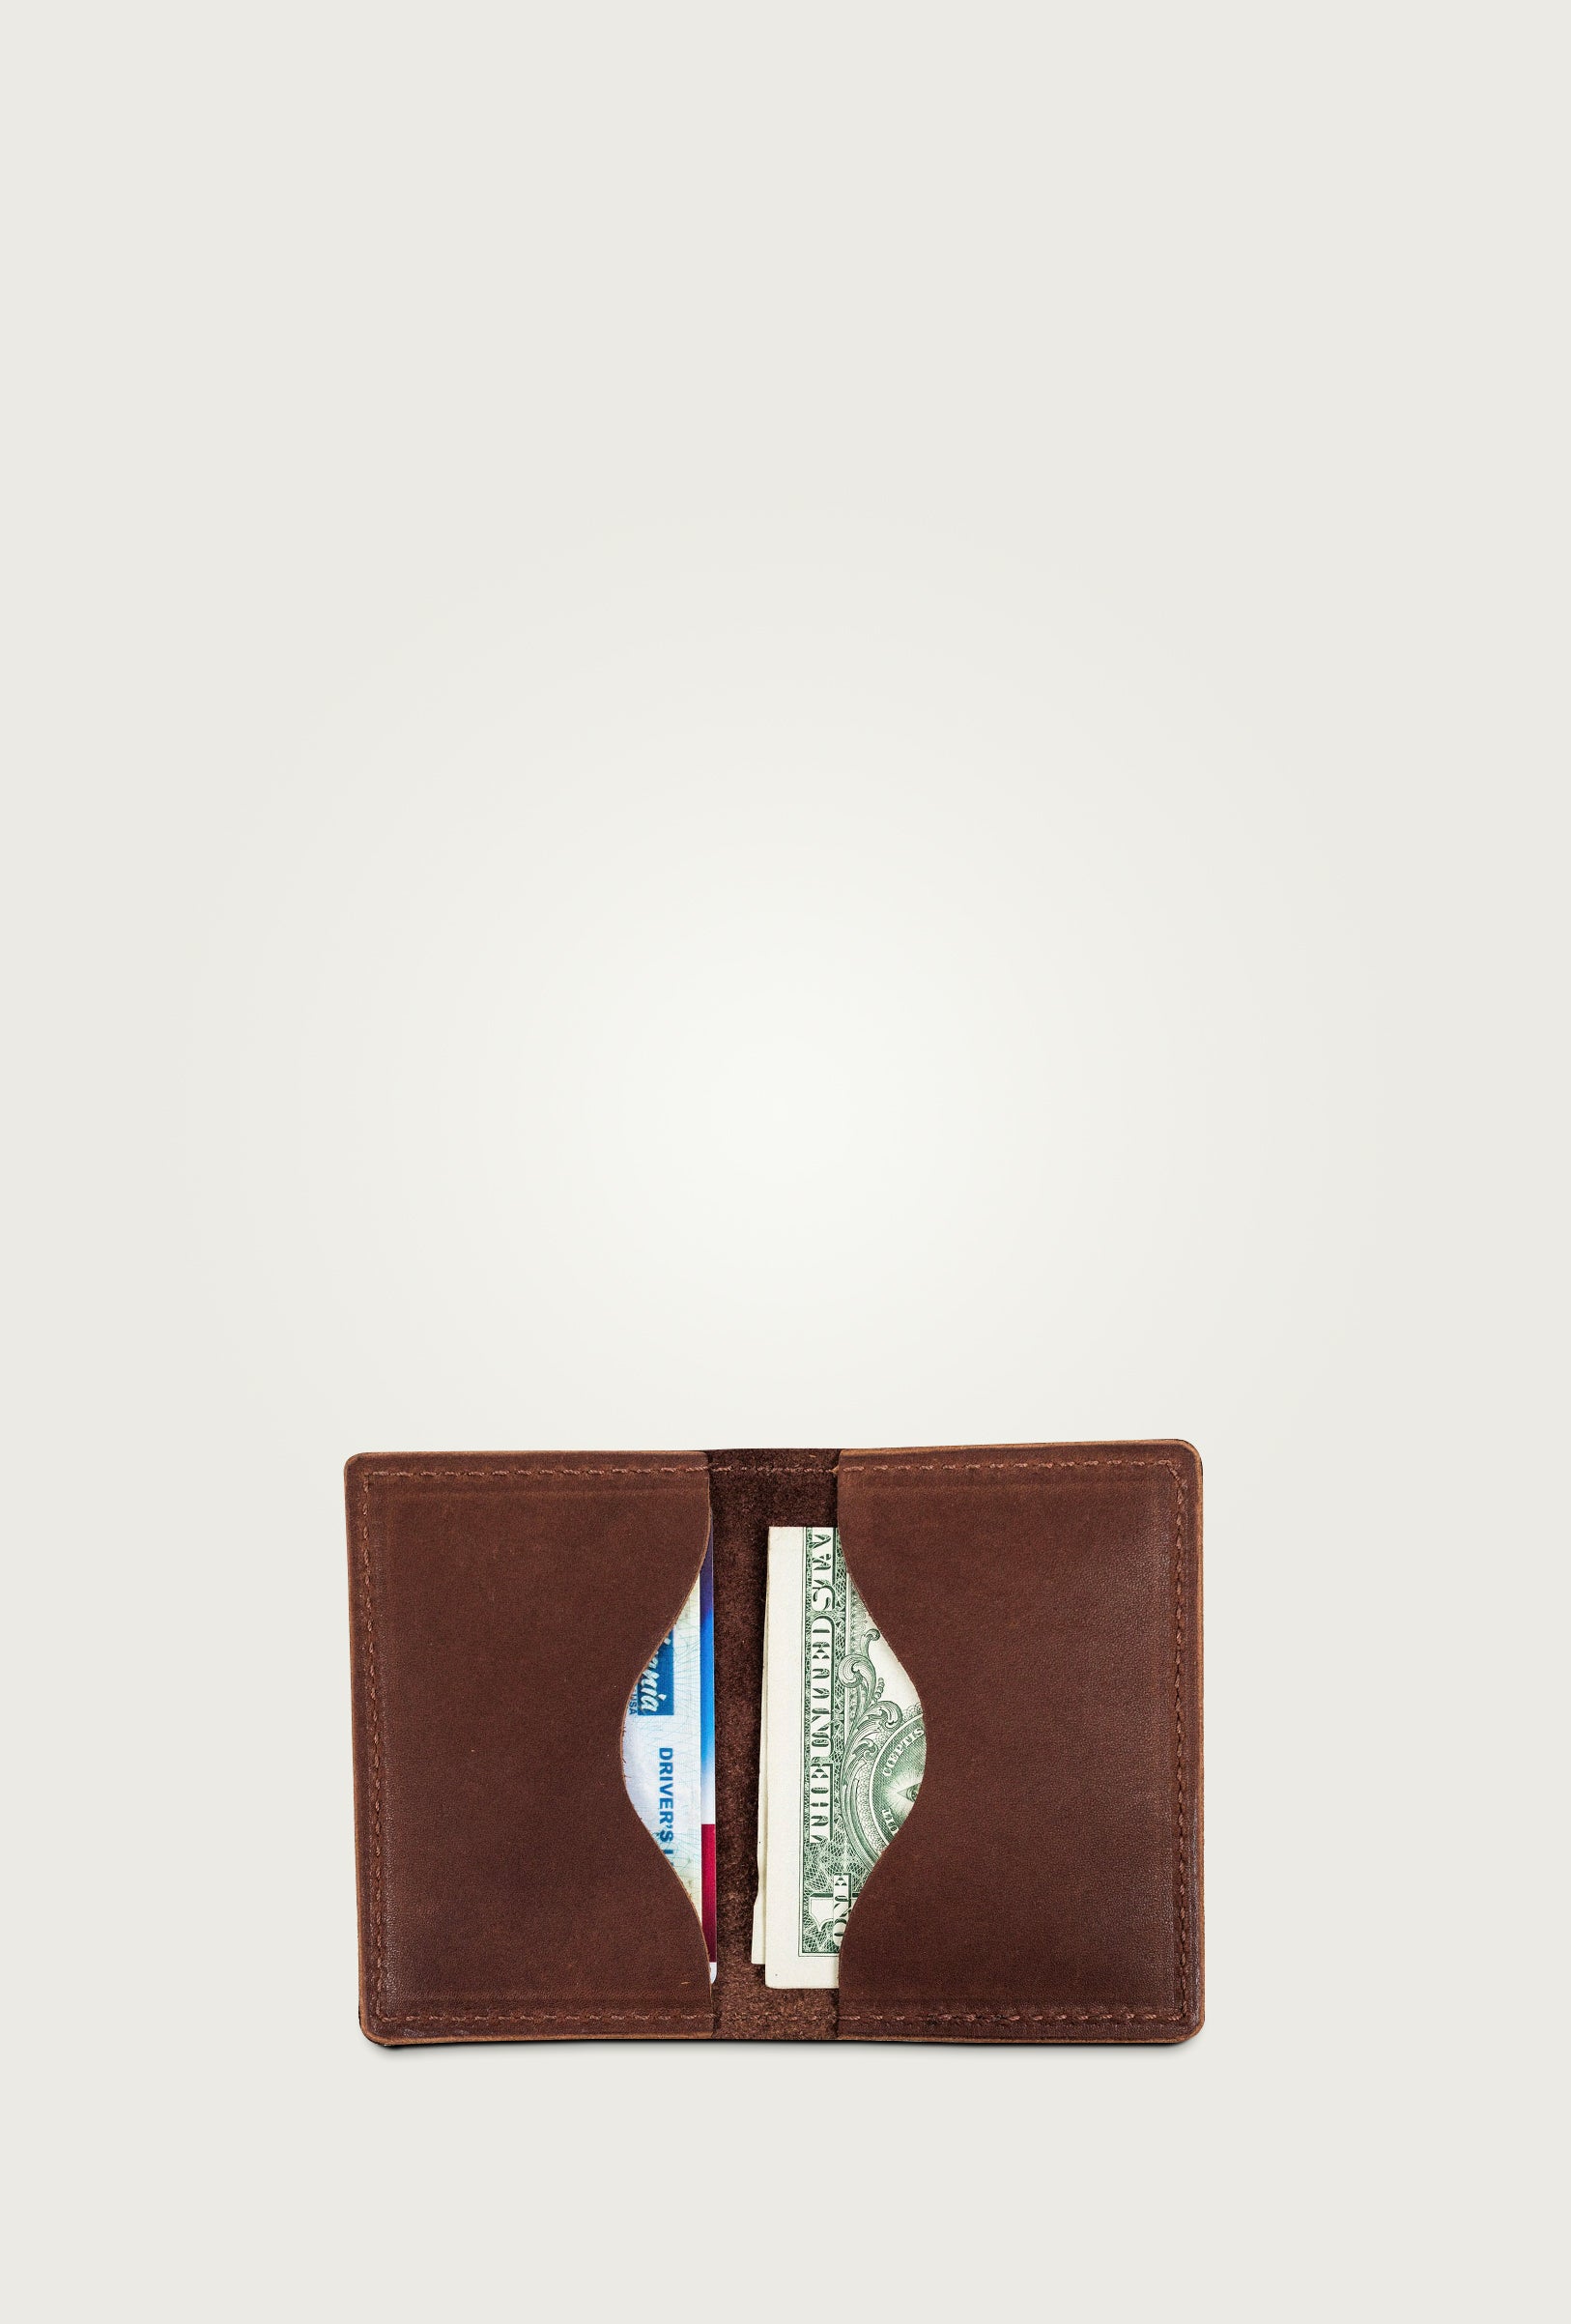 Branded Bifold Slim Wallet – Welsh Mtn Co.